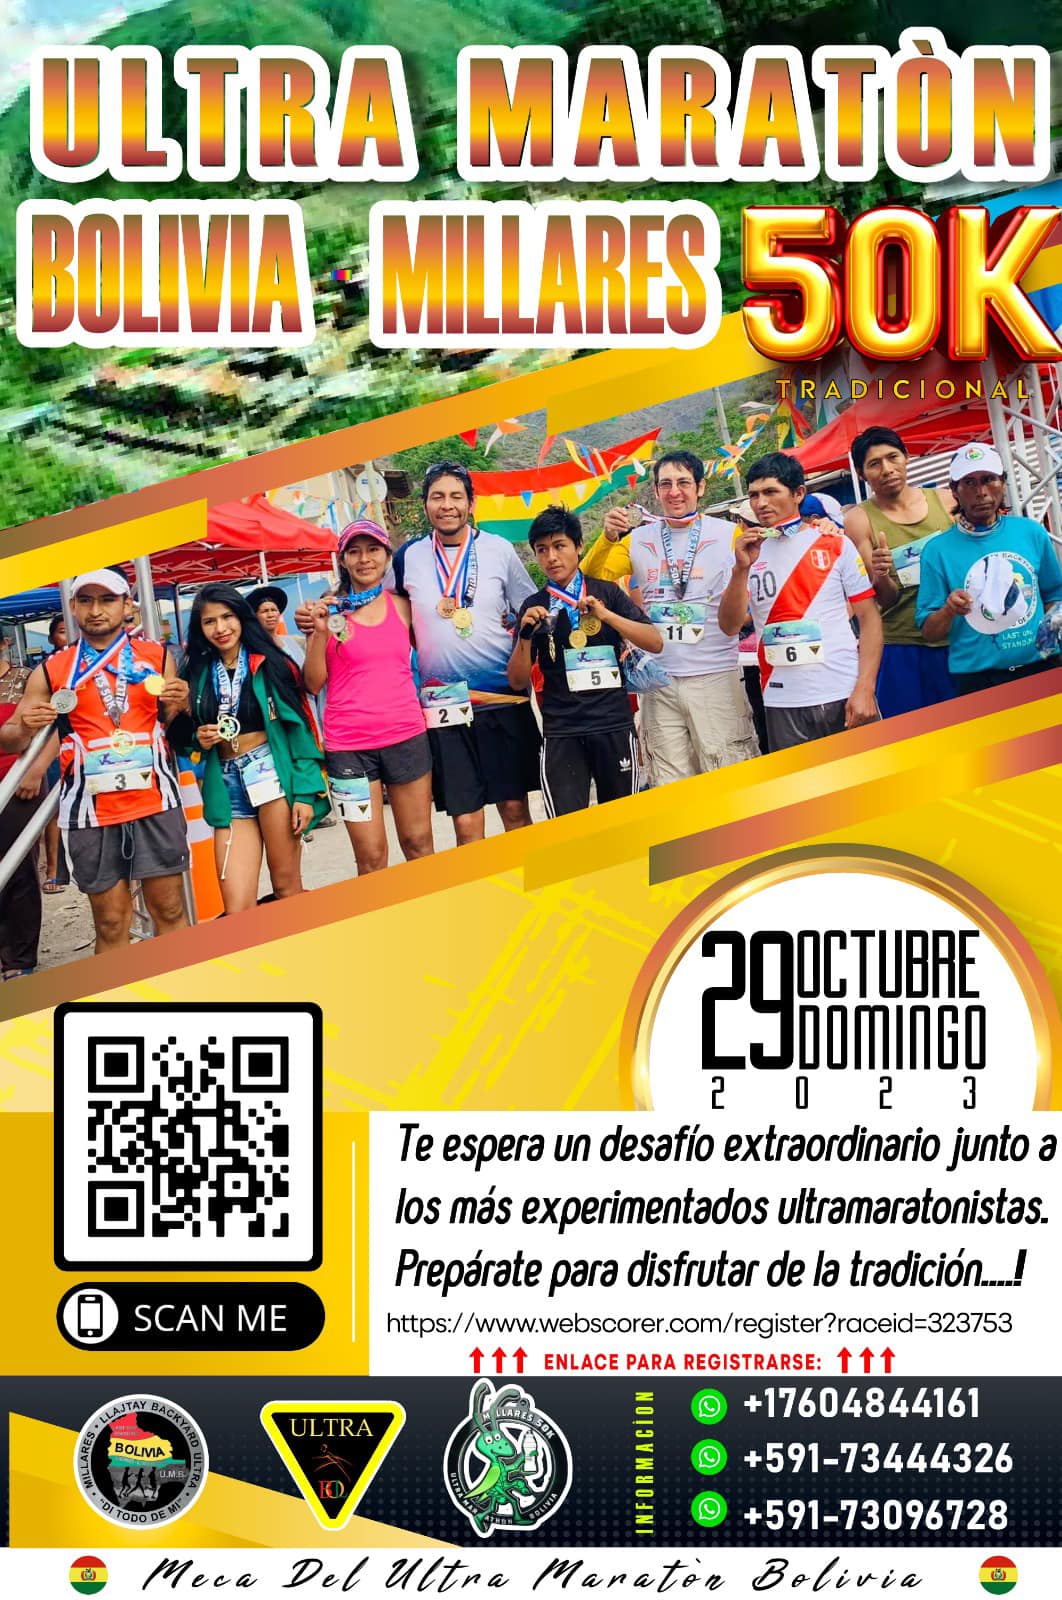 Ultramaraton Bolivia Series Millares 50K